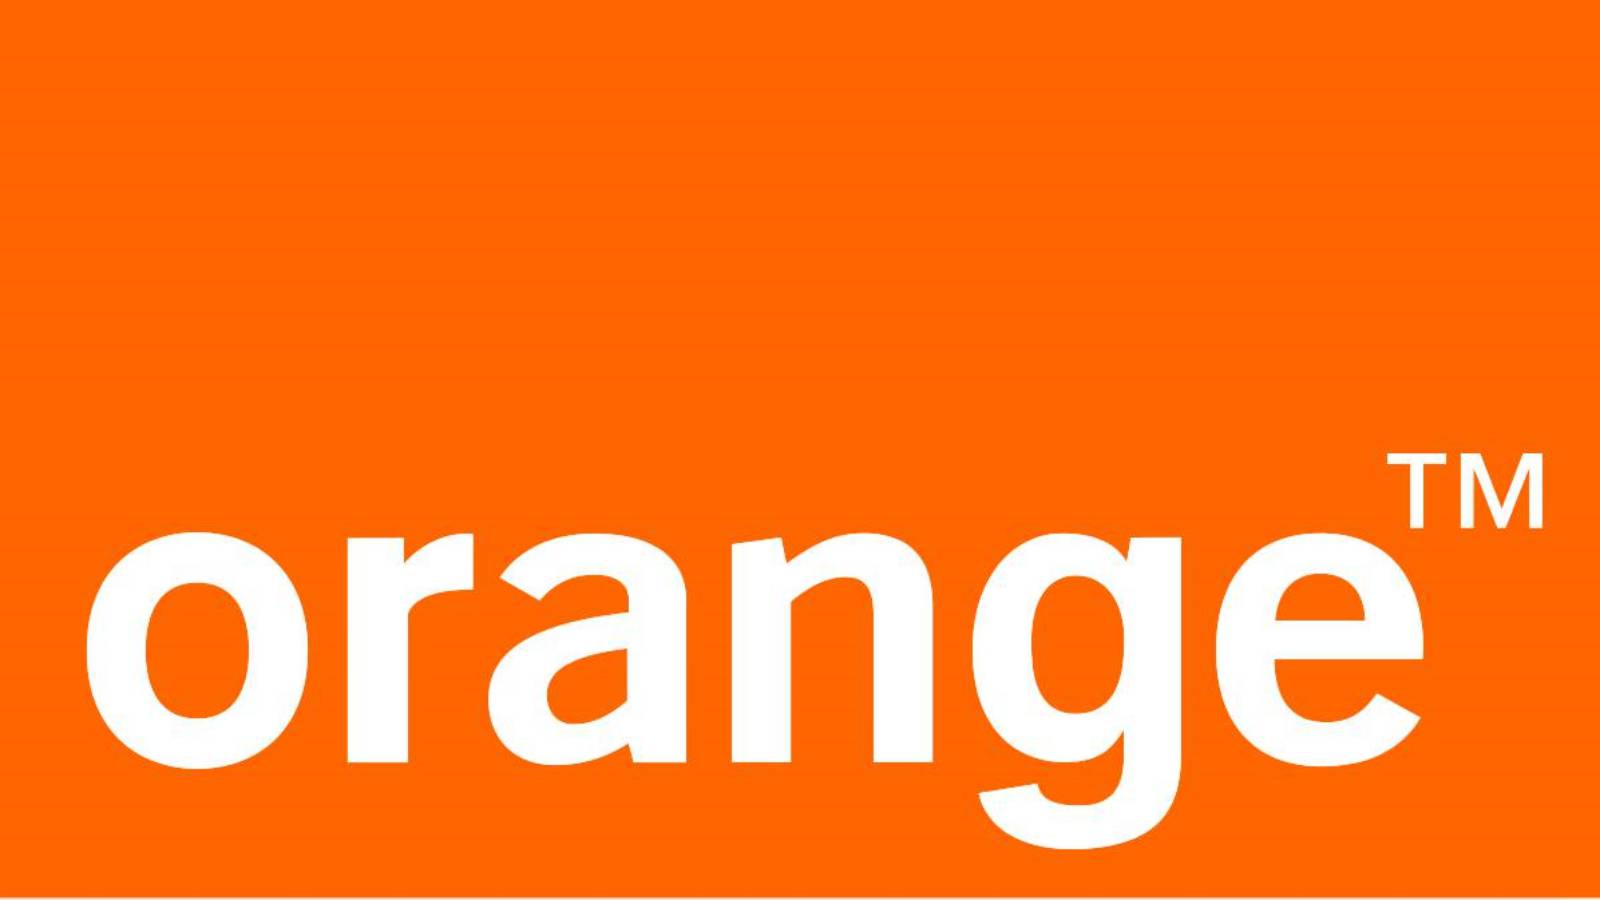 Orange Informeaza Oficial Ofera GRATUIT Clientii Romani